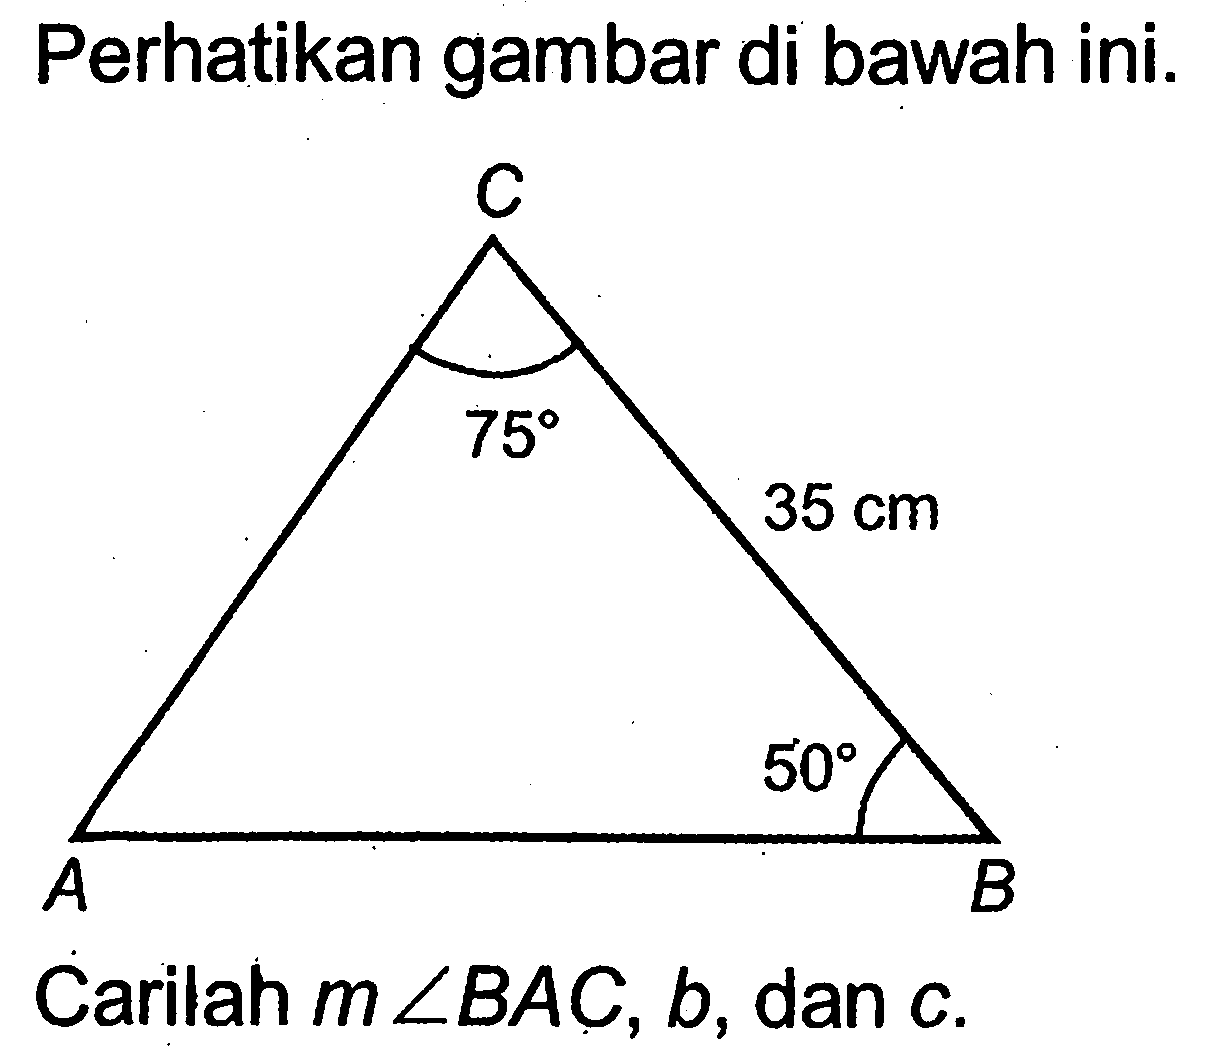 Perhatikan gambar di bawah ini.Carilah m sudut BAC, b, dan c.